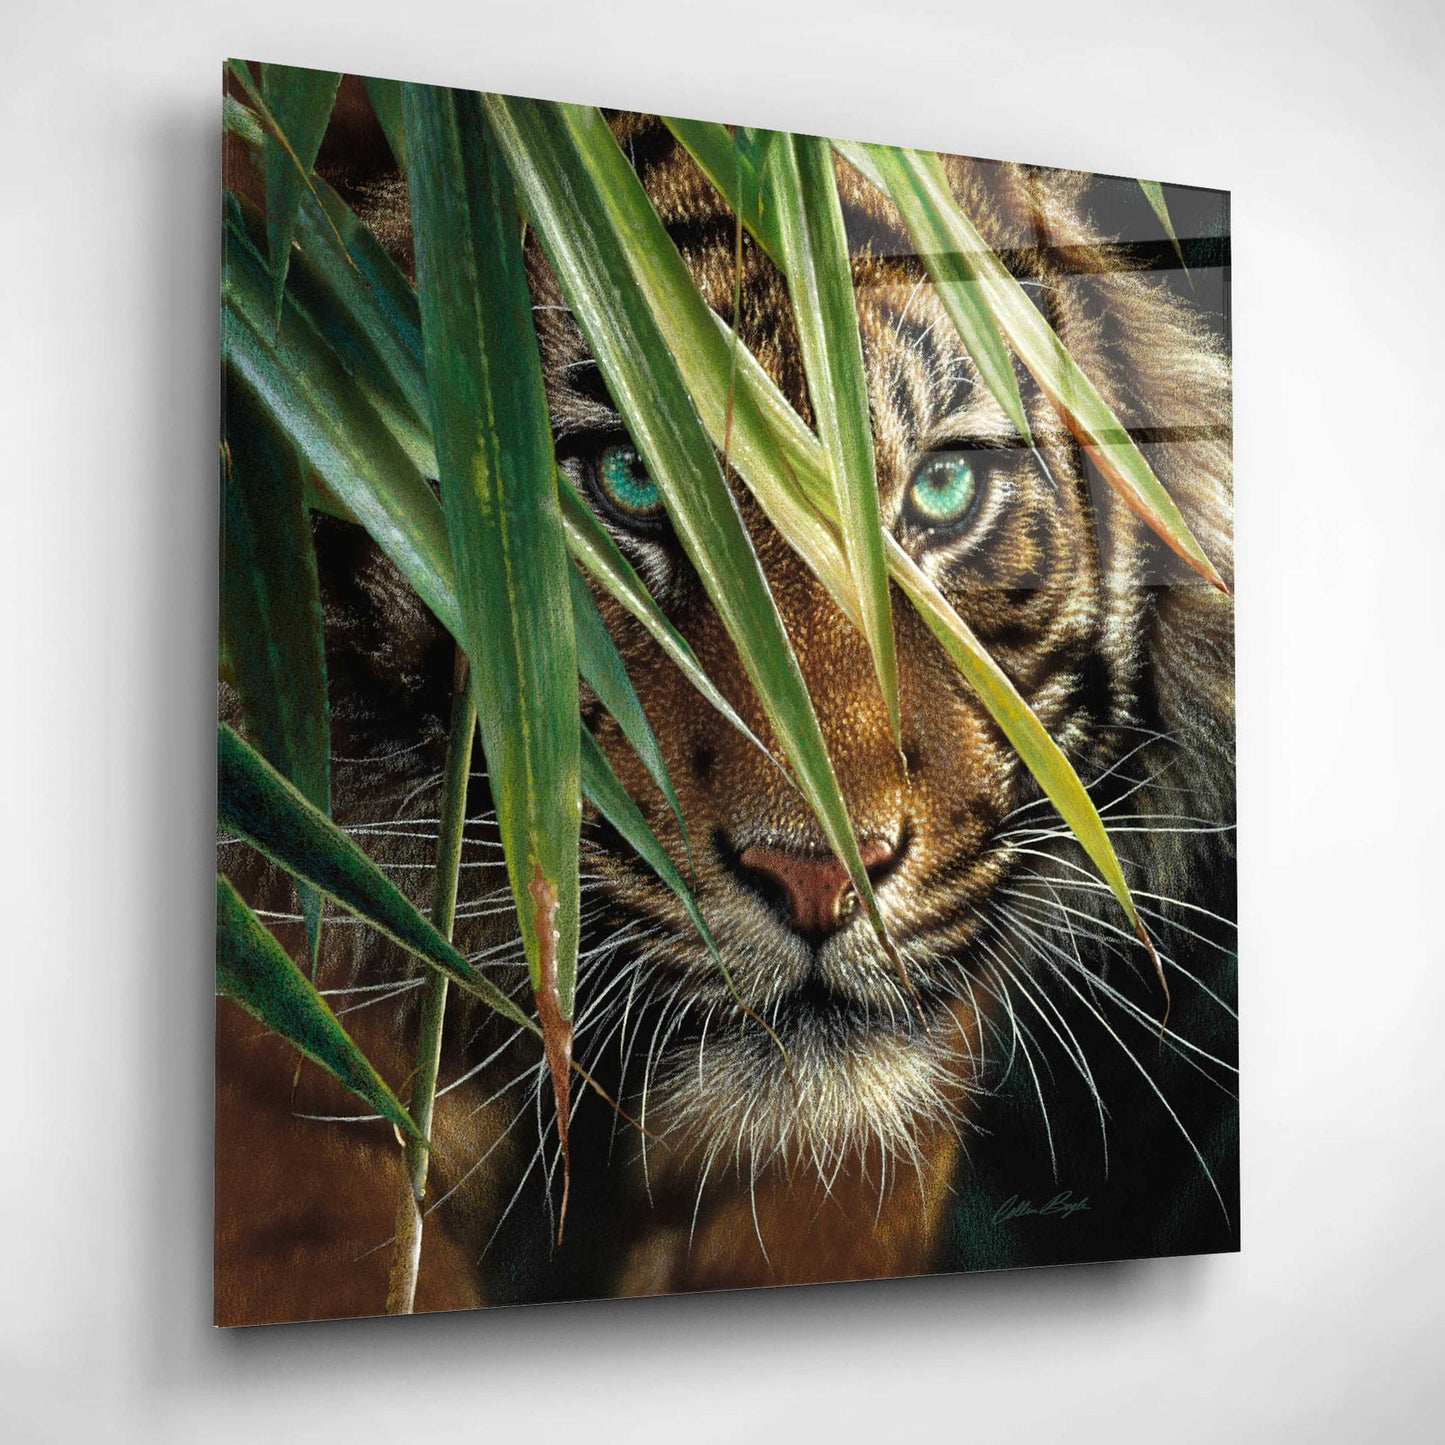 Epic Art 'Tiger Eyes' by Collin Bogle Acrylic Glass Wall Art,12x12